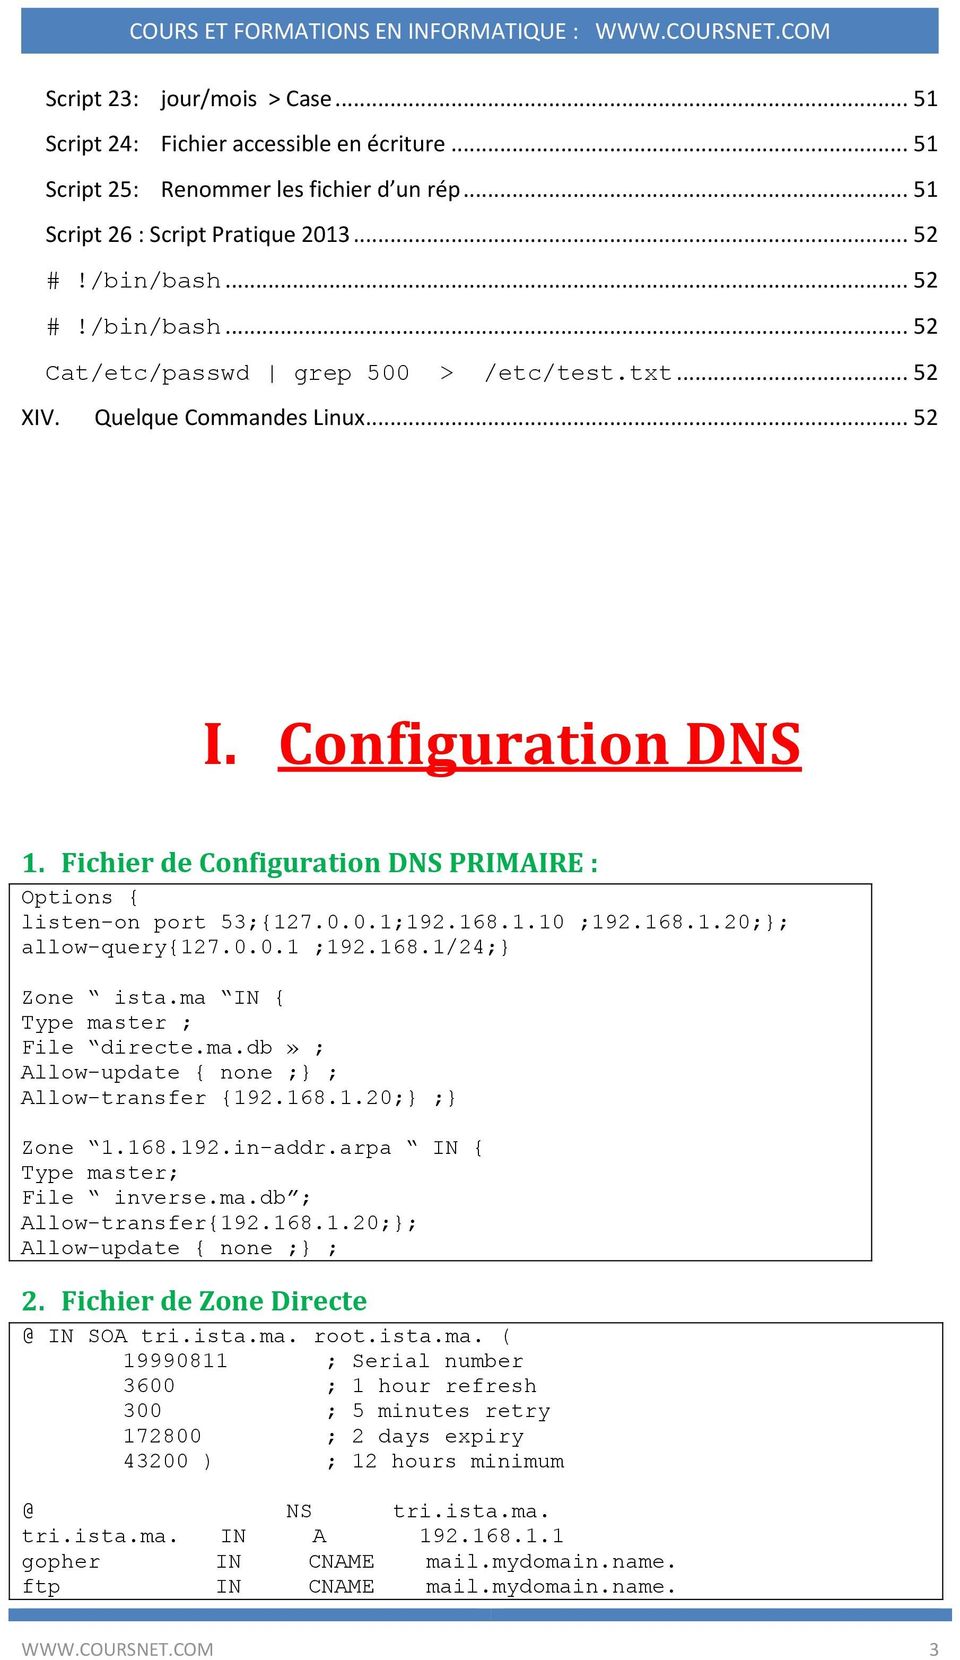 Fichier de Configuration DNS PRIMAIRE : Options { listen-on port 53;{127.0.0.1;192.168.1.10 ;192.168.1.20;}; allow-query{127.0.0.1 ;192.168.1/24;} Zone ista.ma 